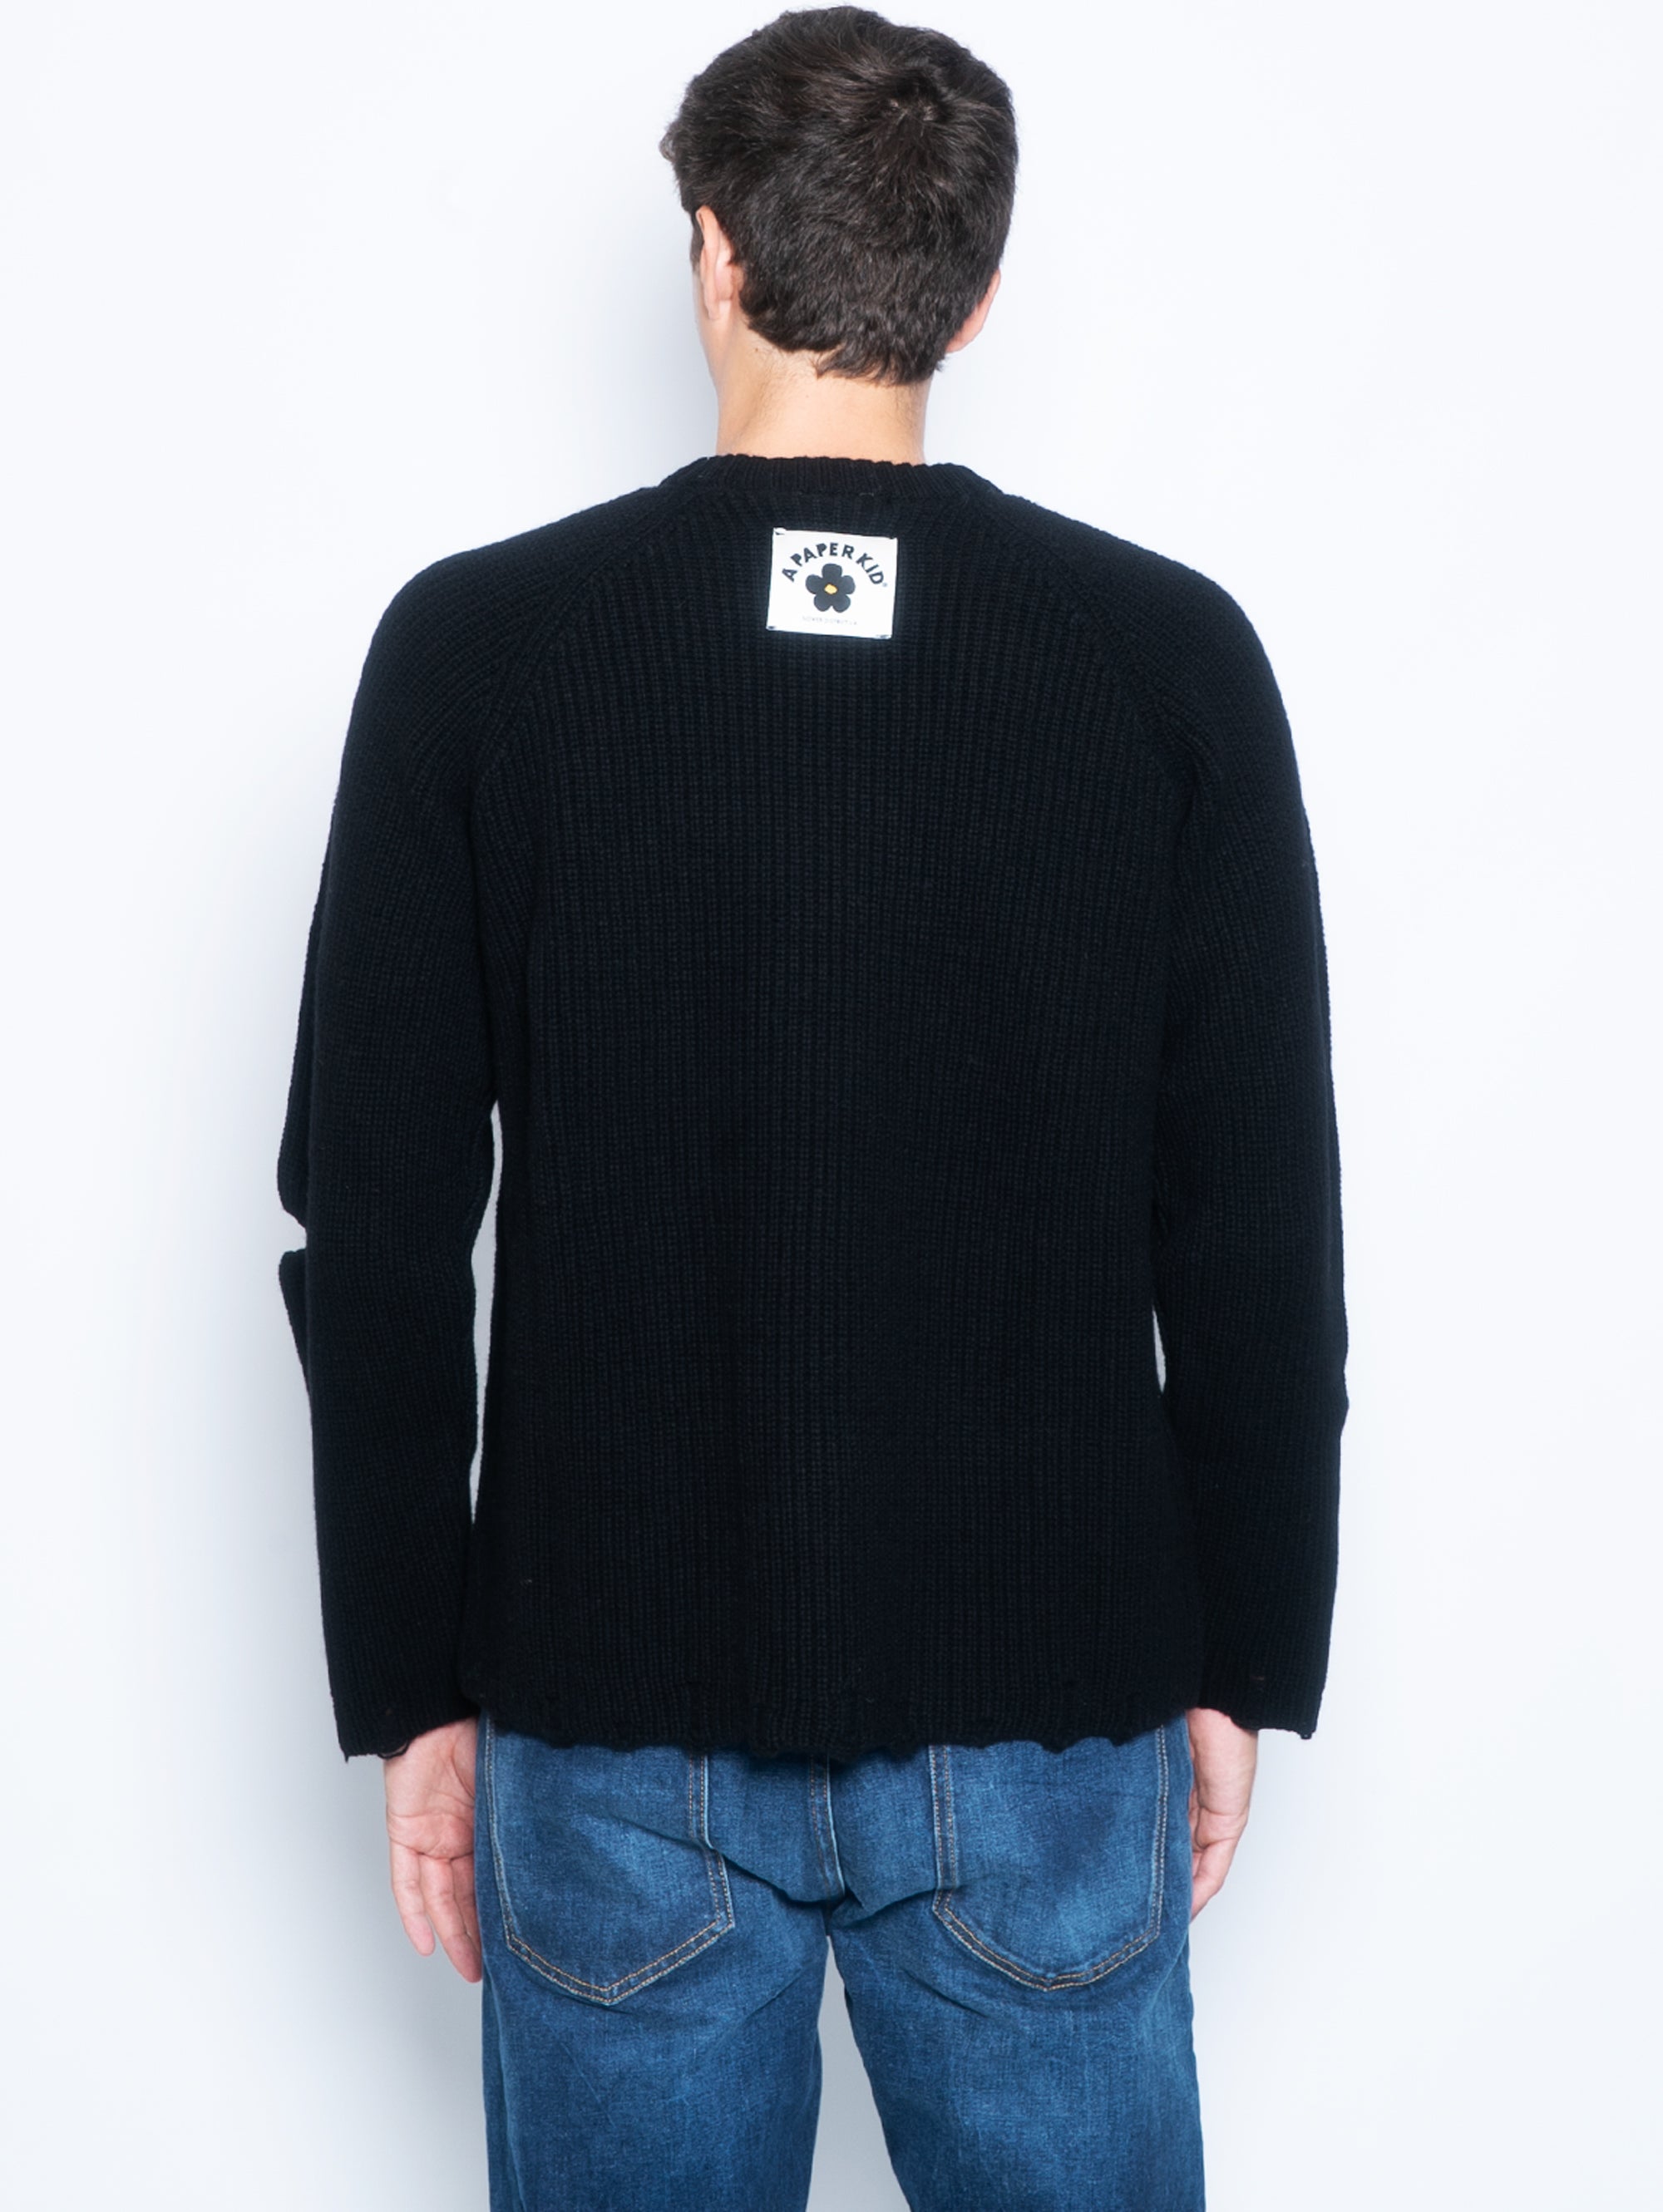 Black Destroyed Crewneck Sweater